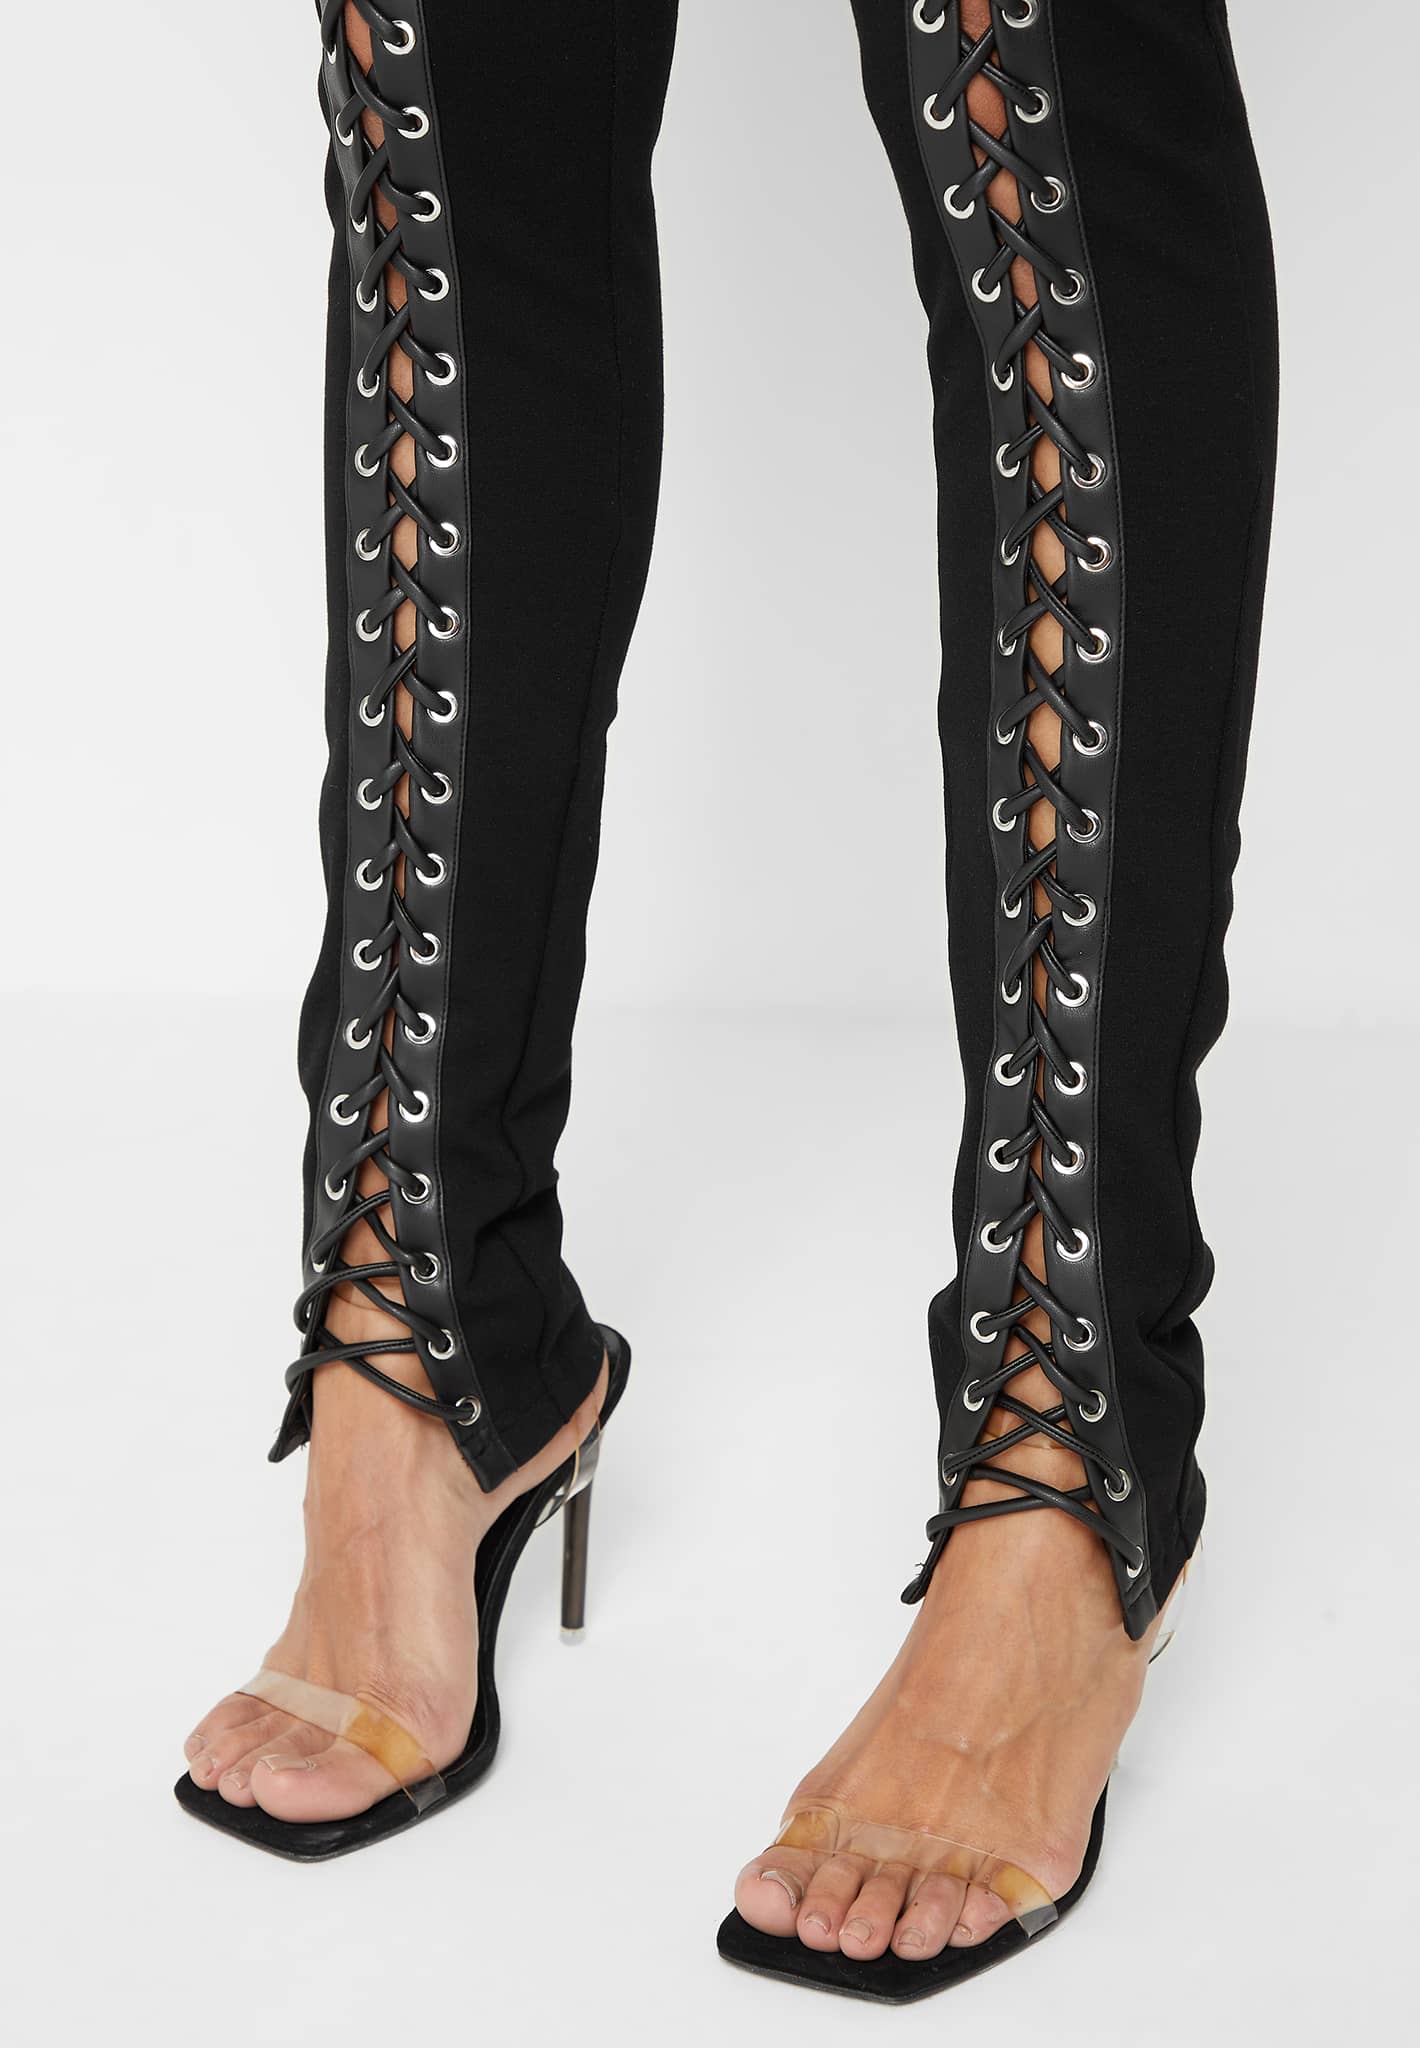 L & B Apparel Black Liquid Leather Leggings with Black Lace Knee